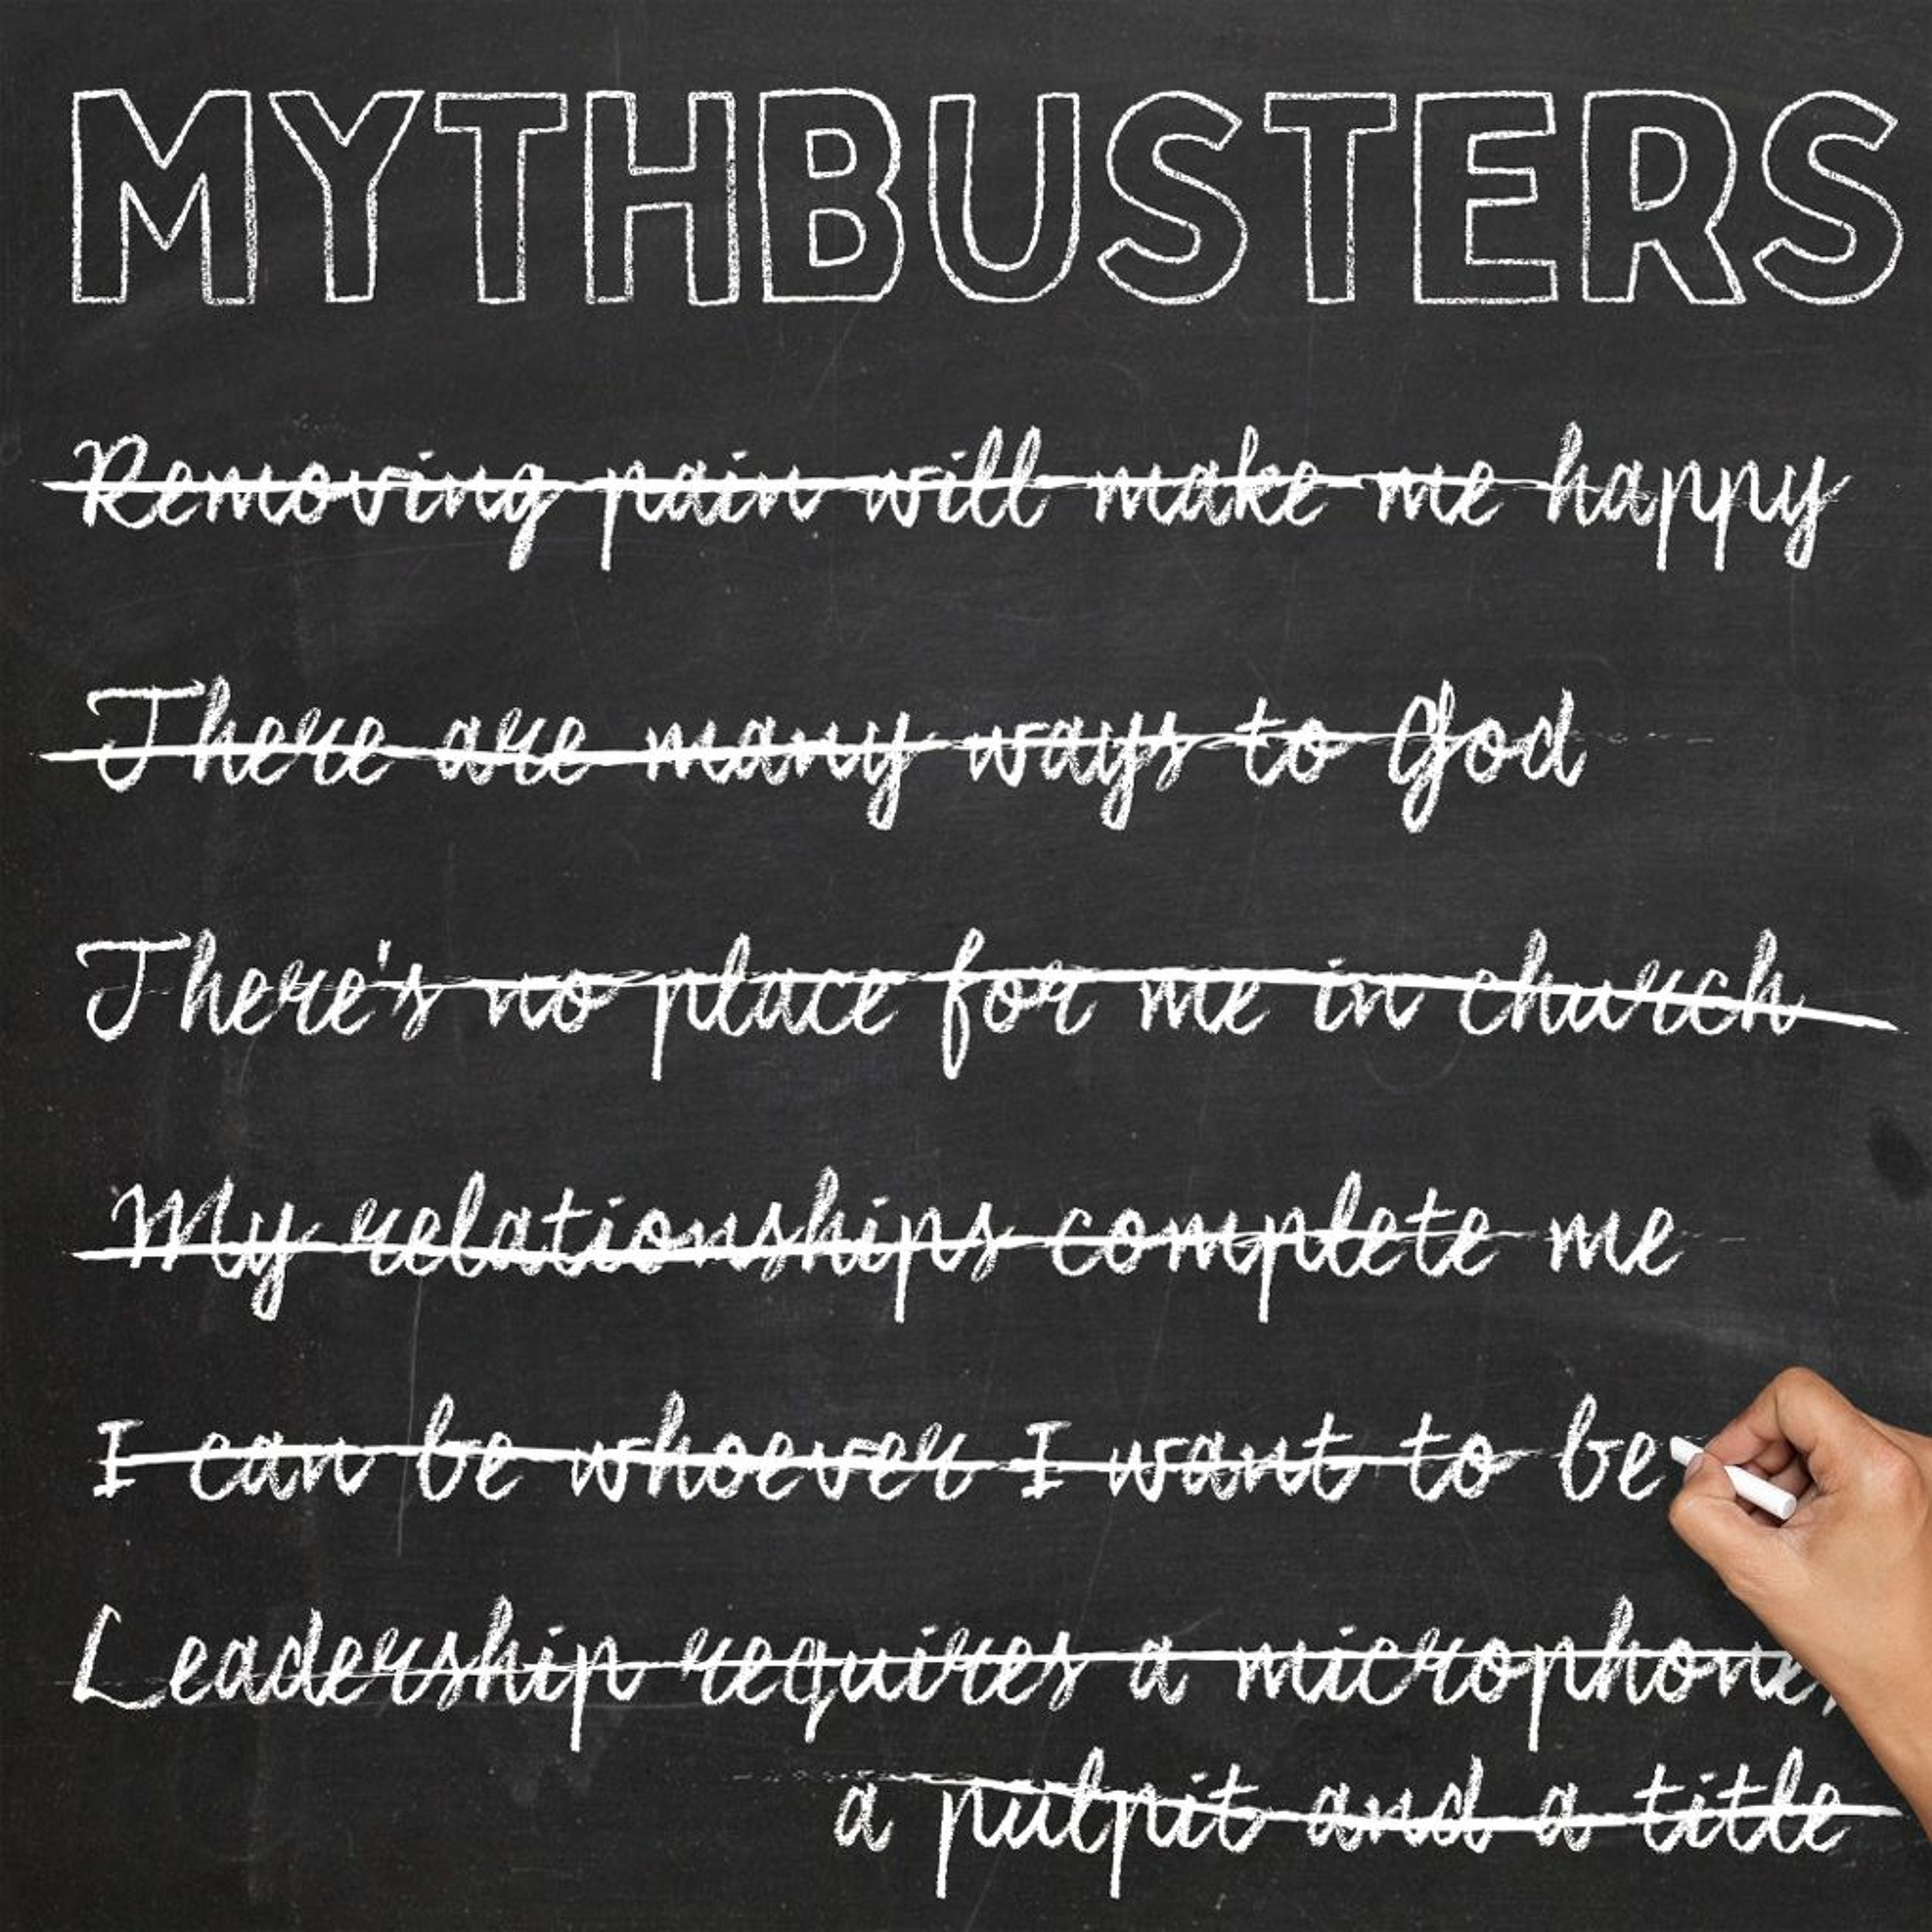 Myth Buster 2 - Myths about leadership - John Harding - 2020.01.19